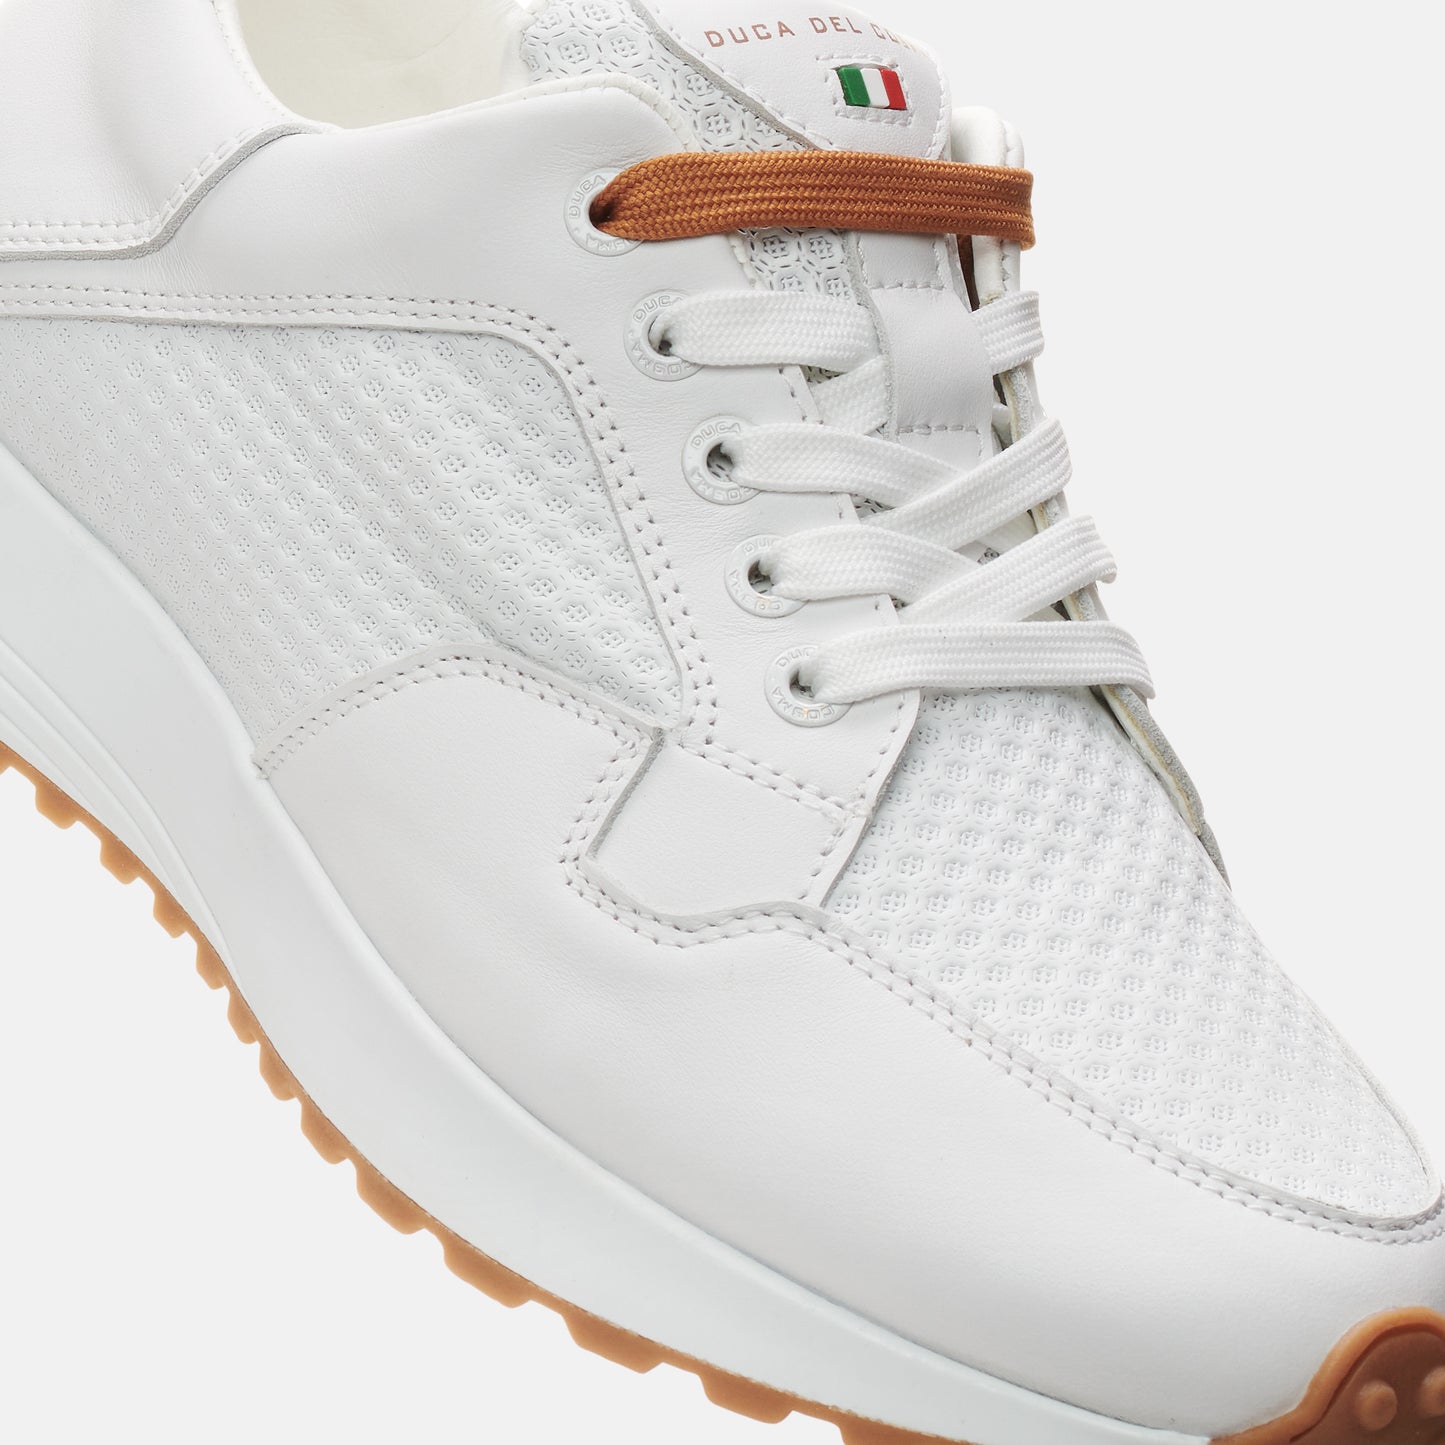 Boreal - White Women's Golf Shoes